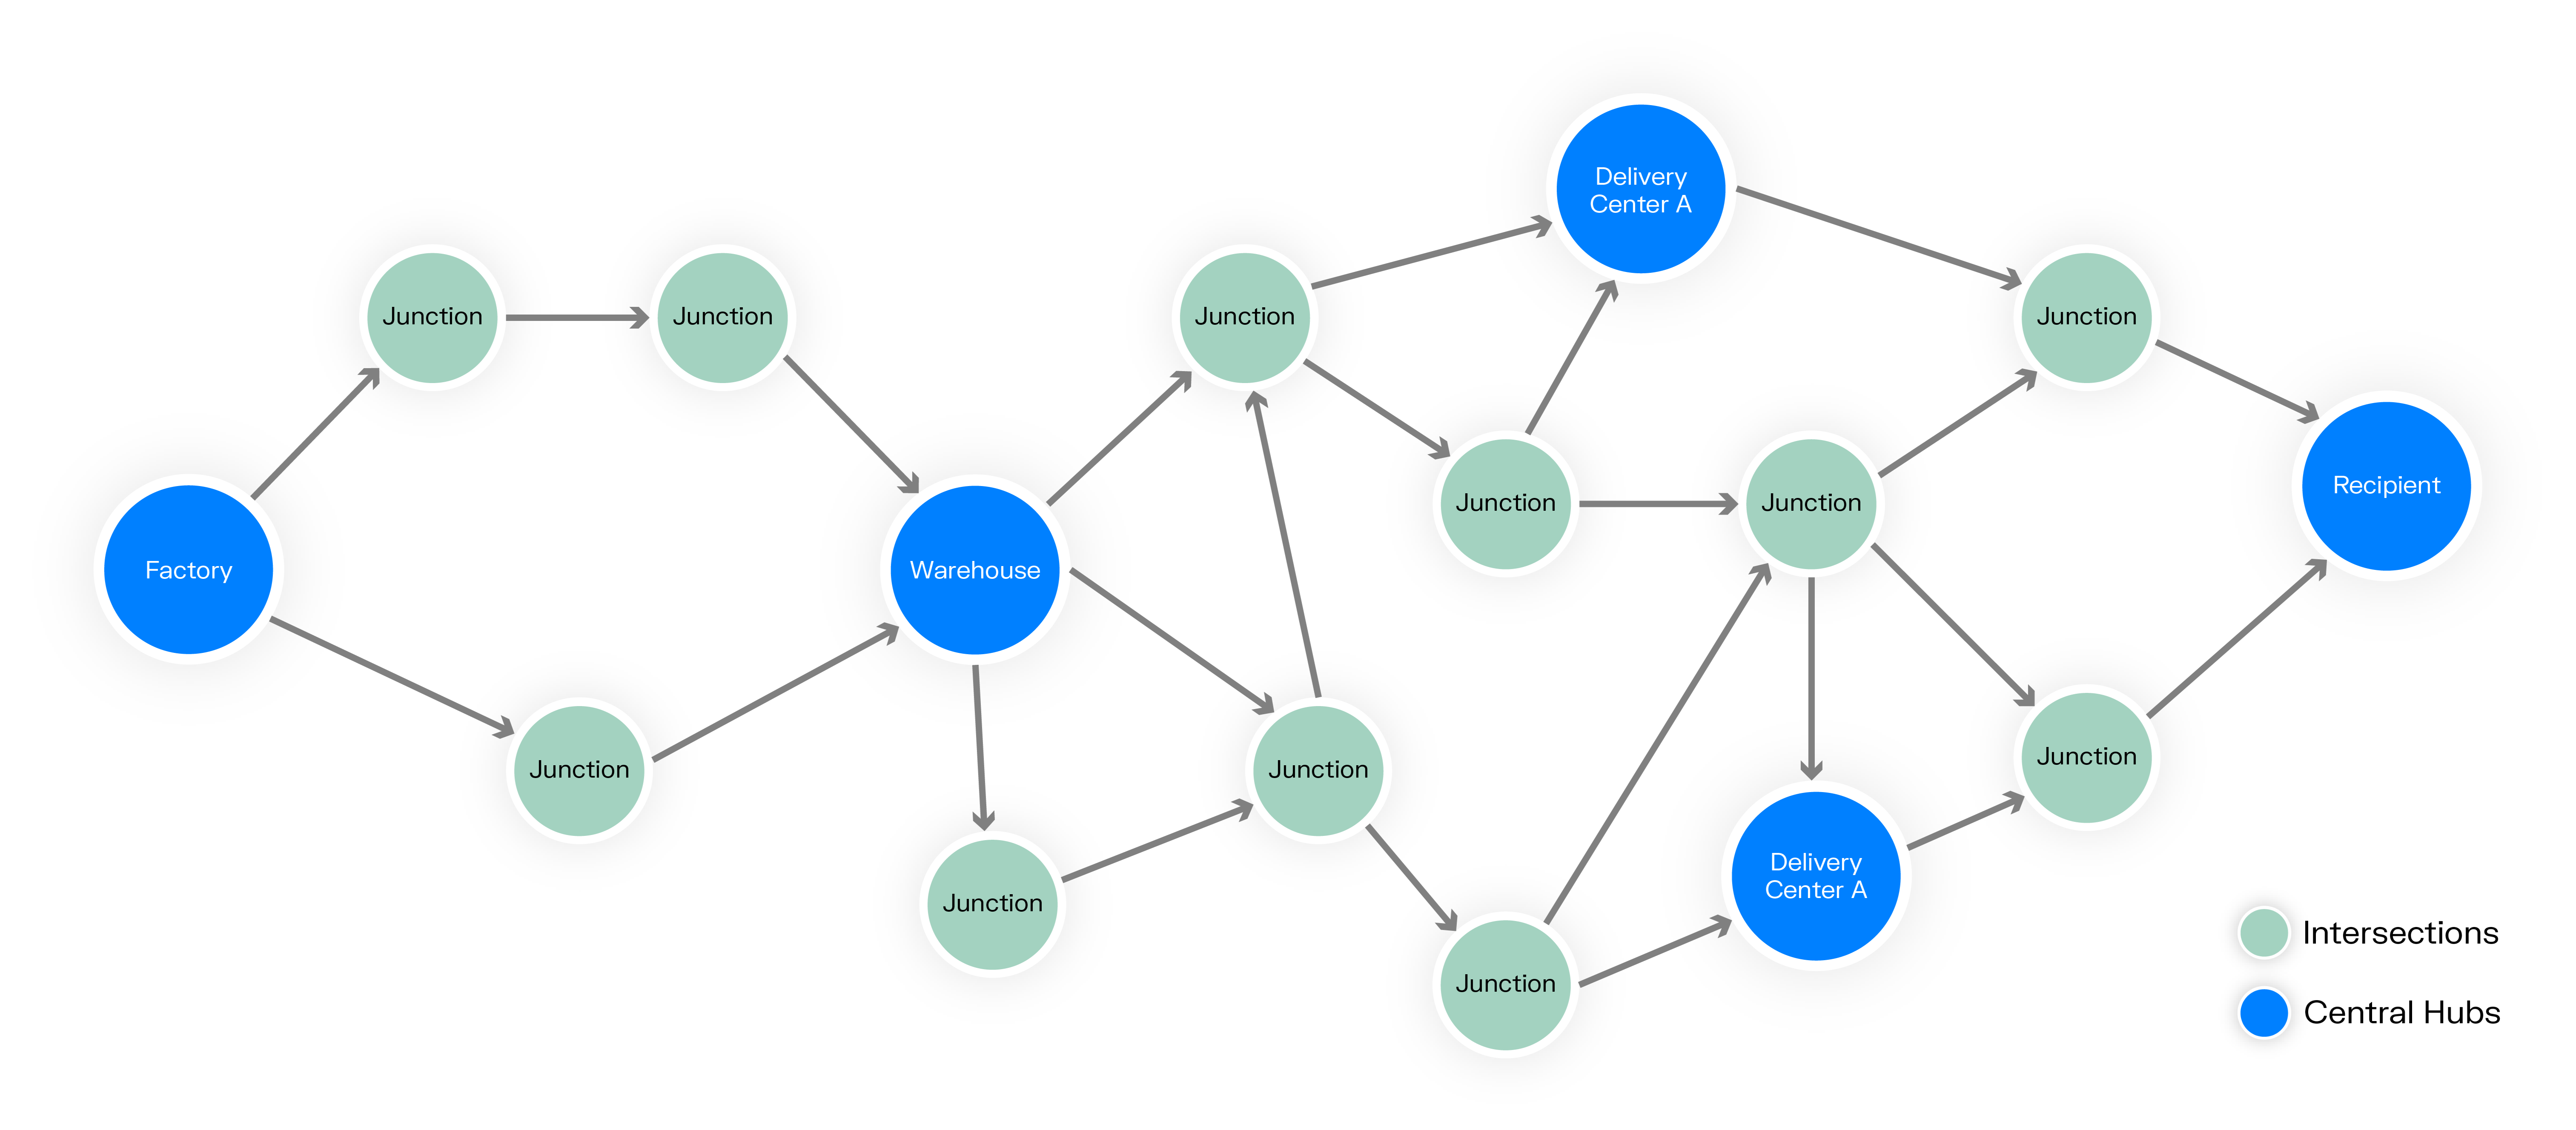 a graph visualization of a logistics supply chain